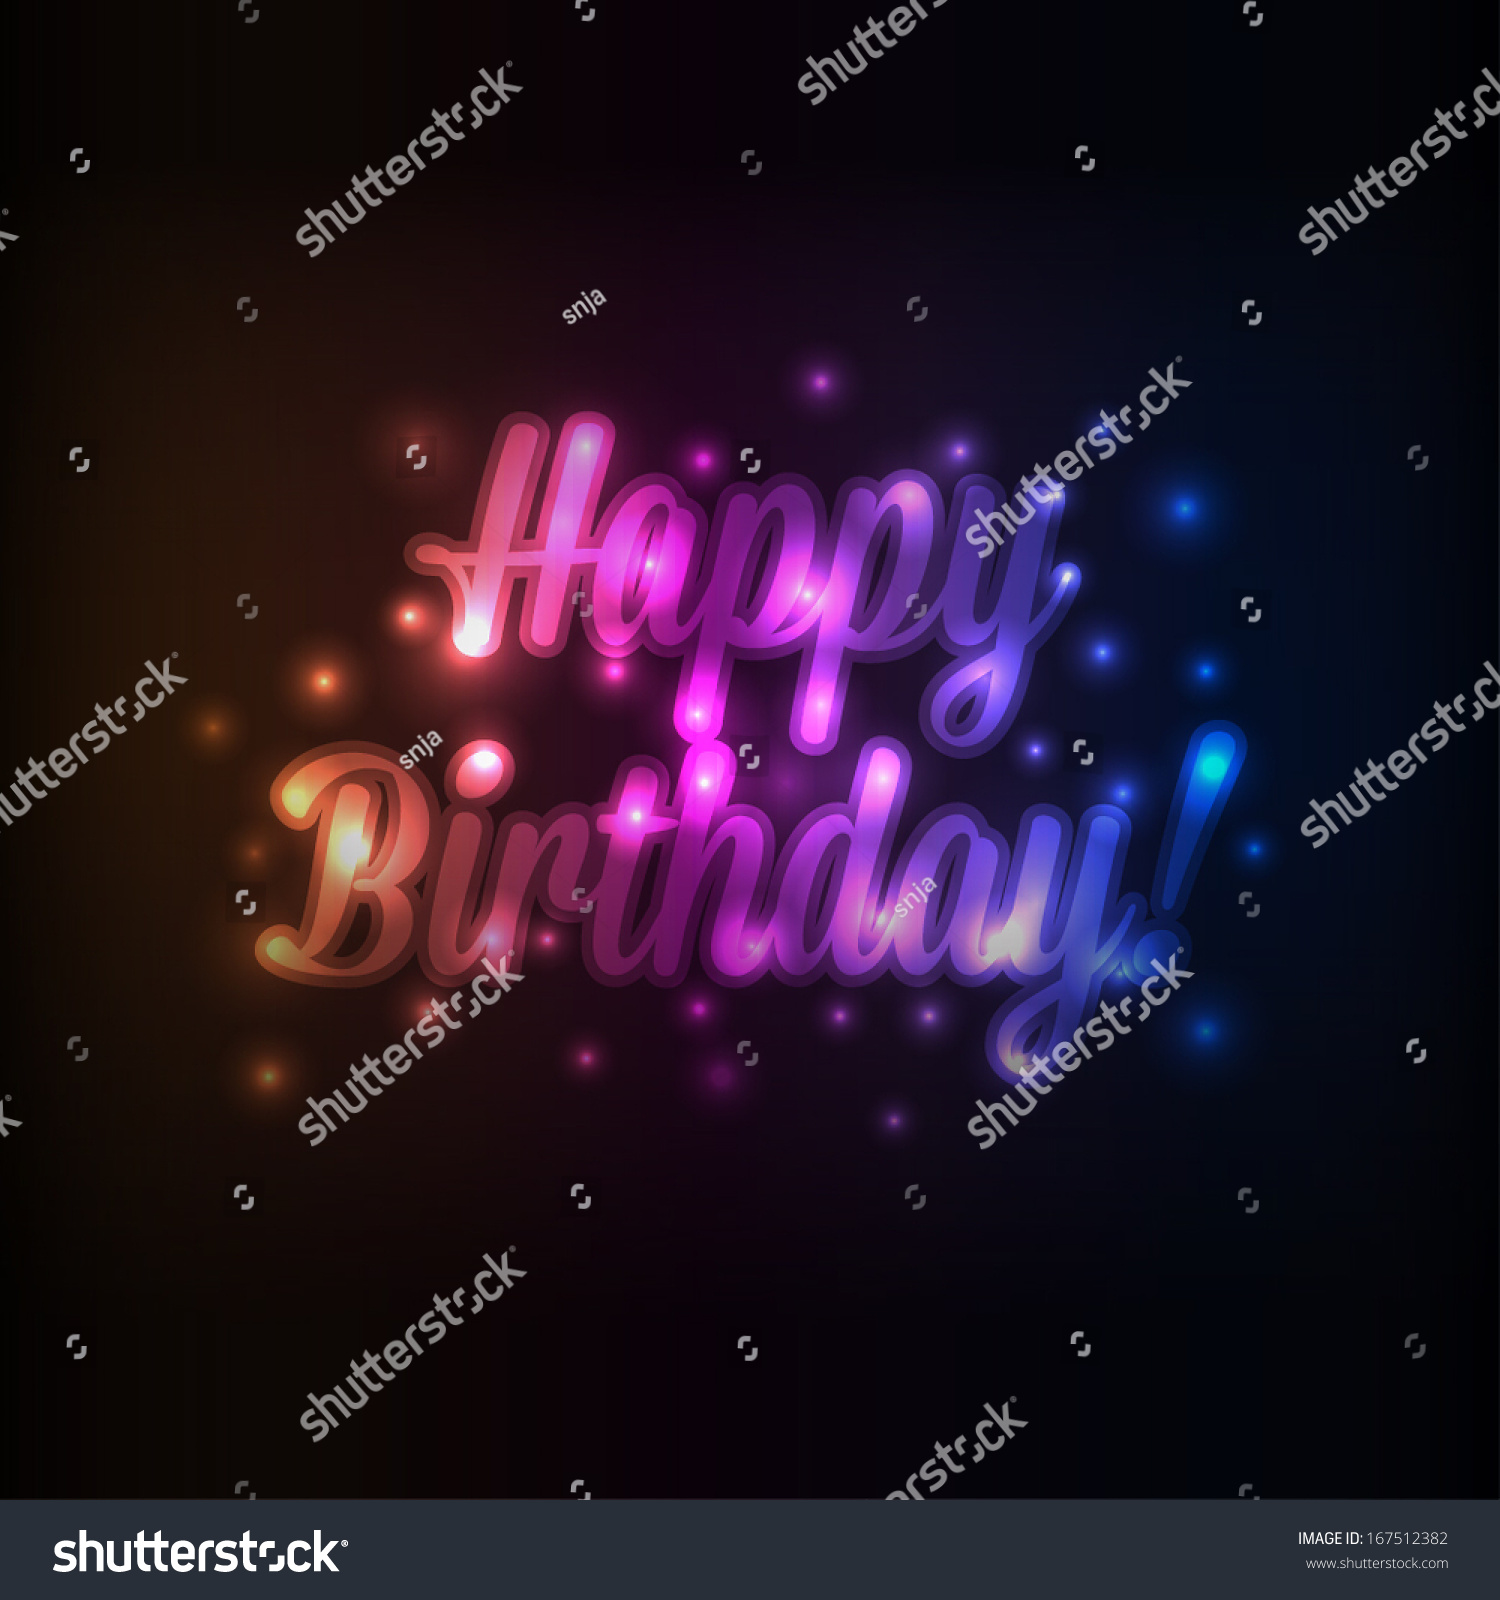 Glowing Lights Happy Birthday - Vector Eps10 - 167512382 : Shutterstock